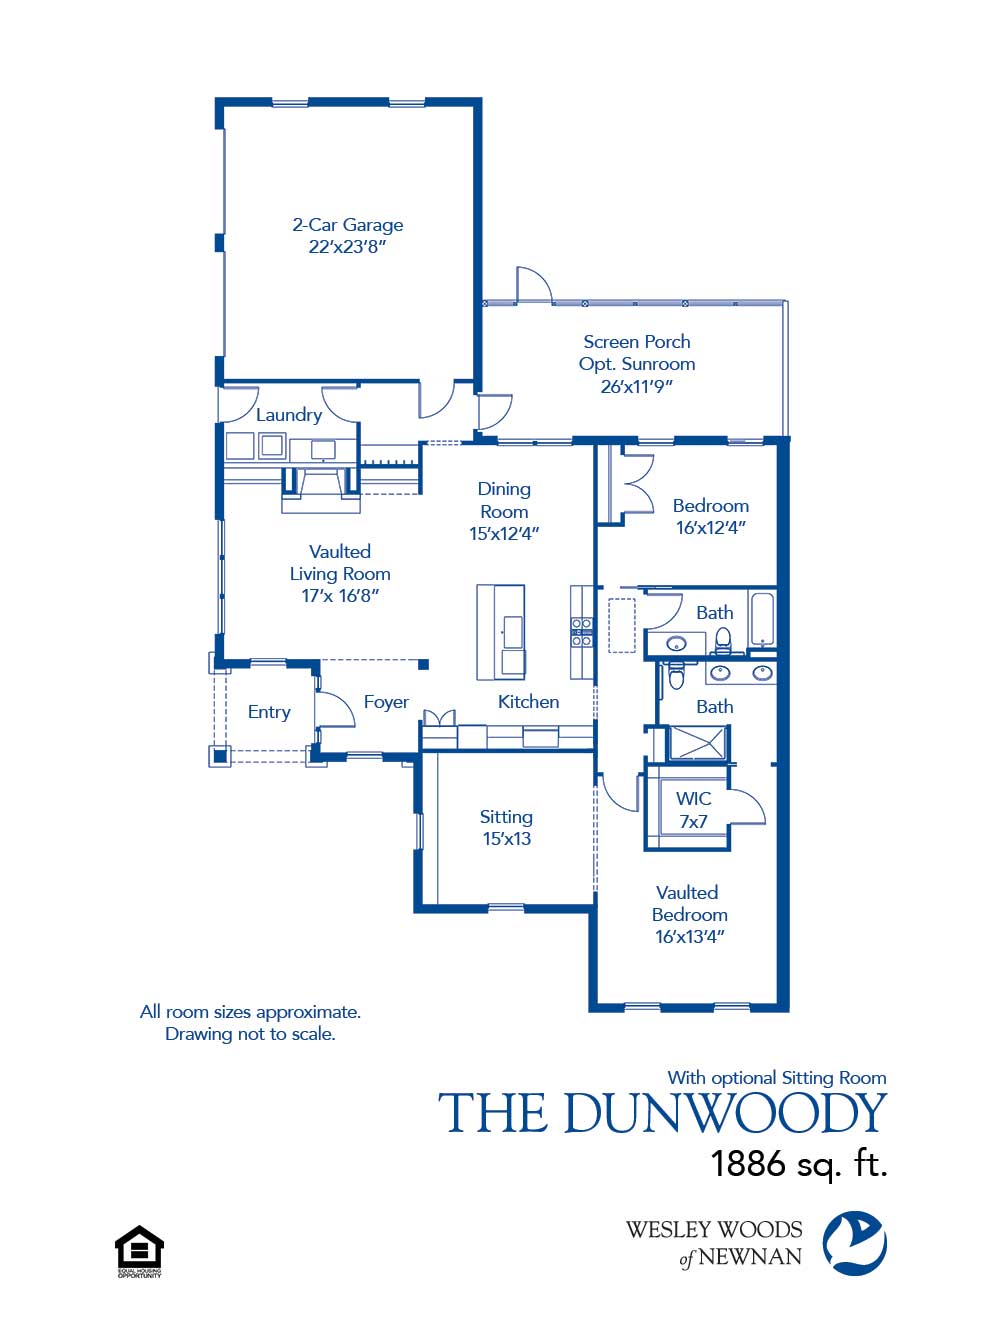 Dunwoody with optional sitting room floor plan